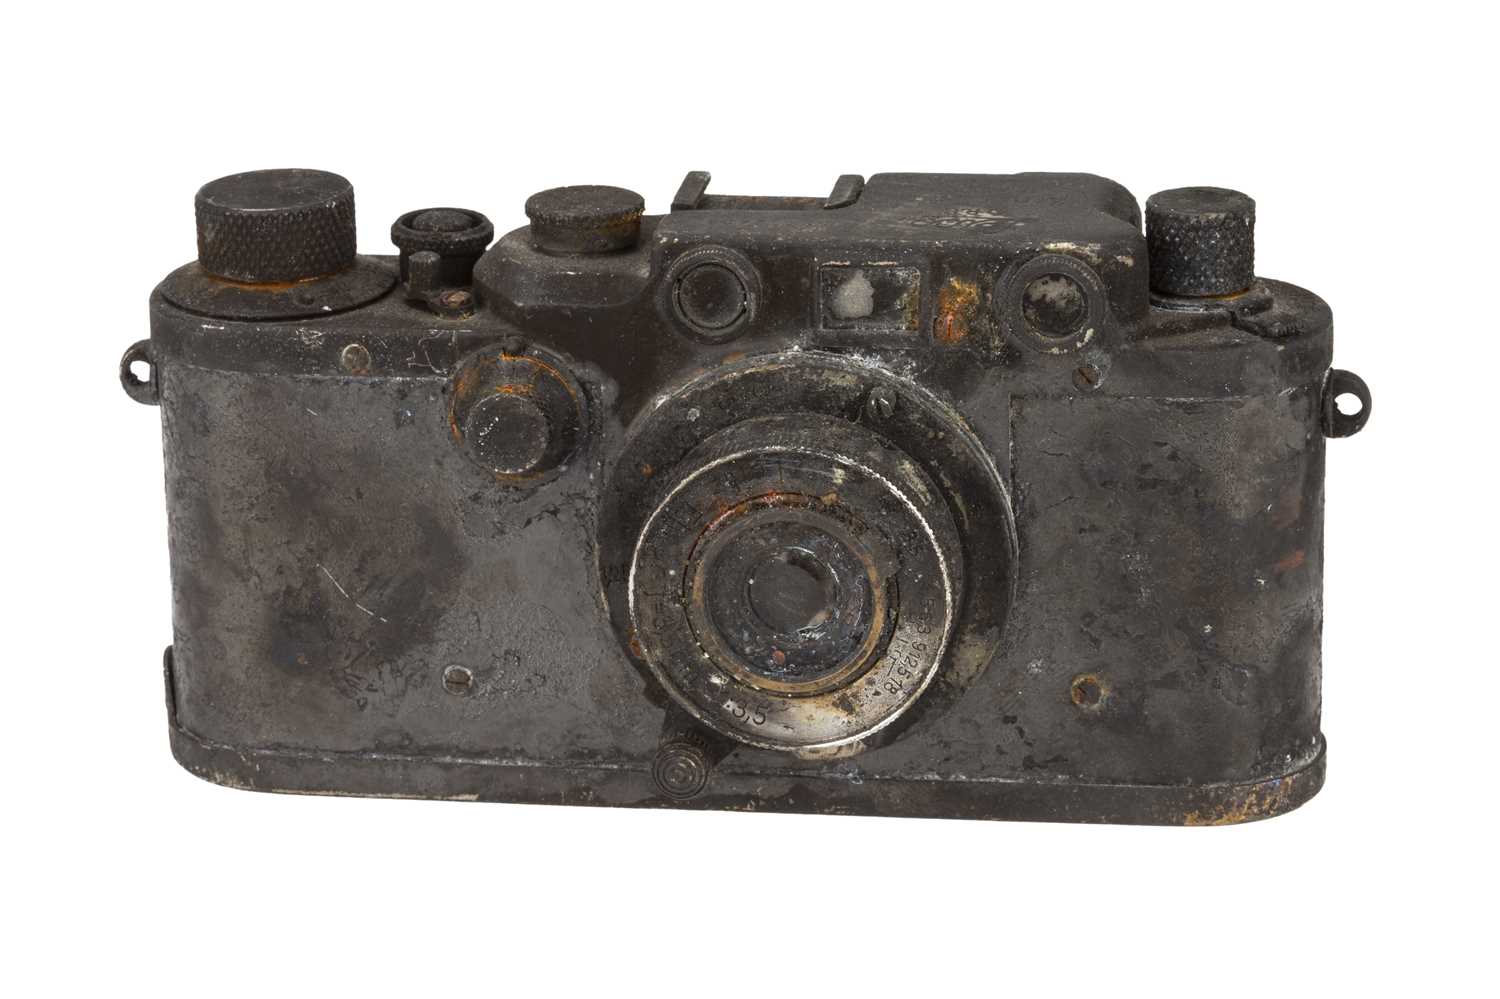 Lot 3 - A Fire Damaged Leica IIIc Rangefinder Camera